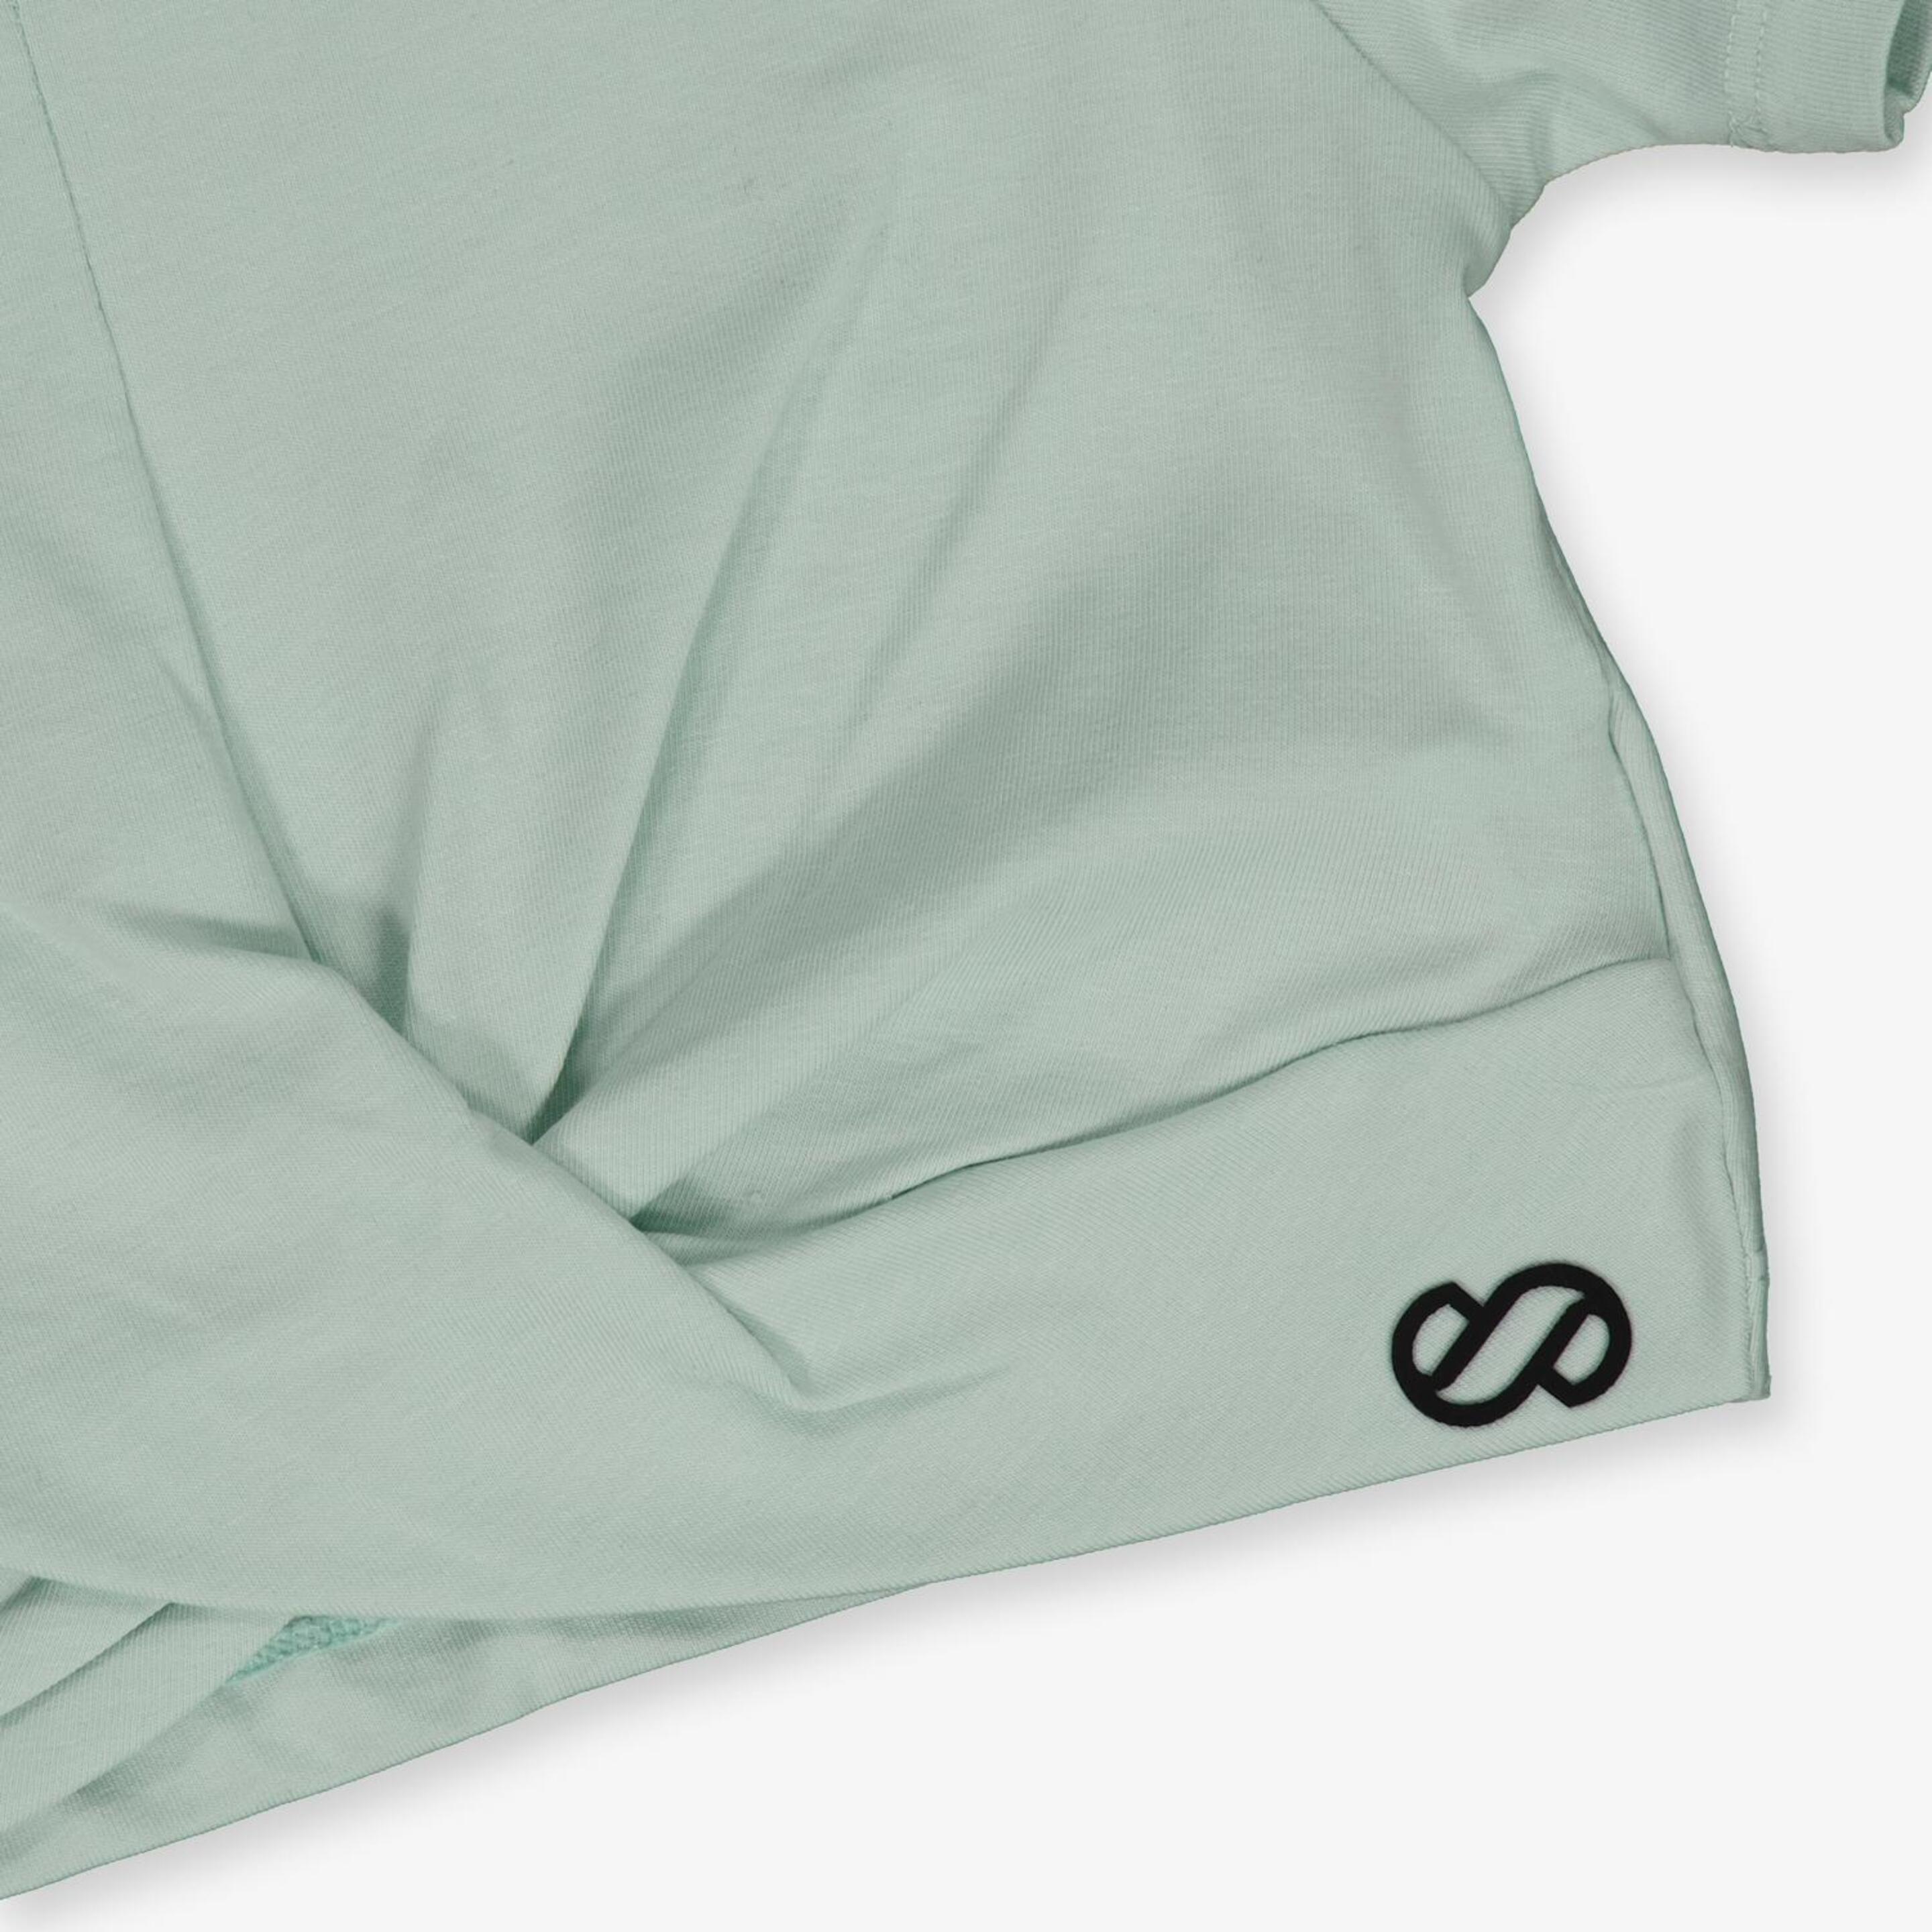 Silver Etnosurf - Verde - Camiseta Niña